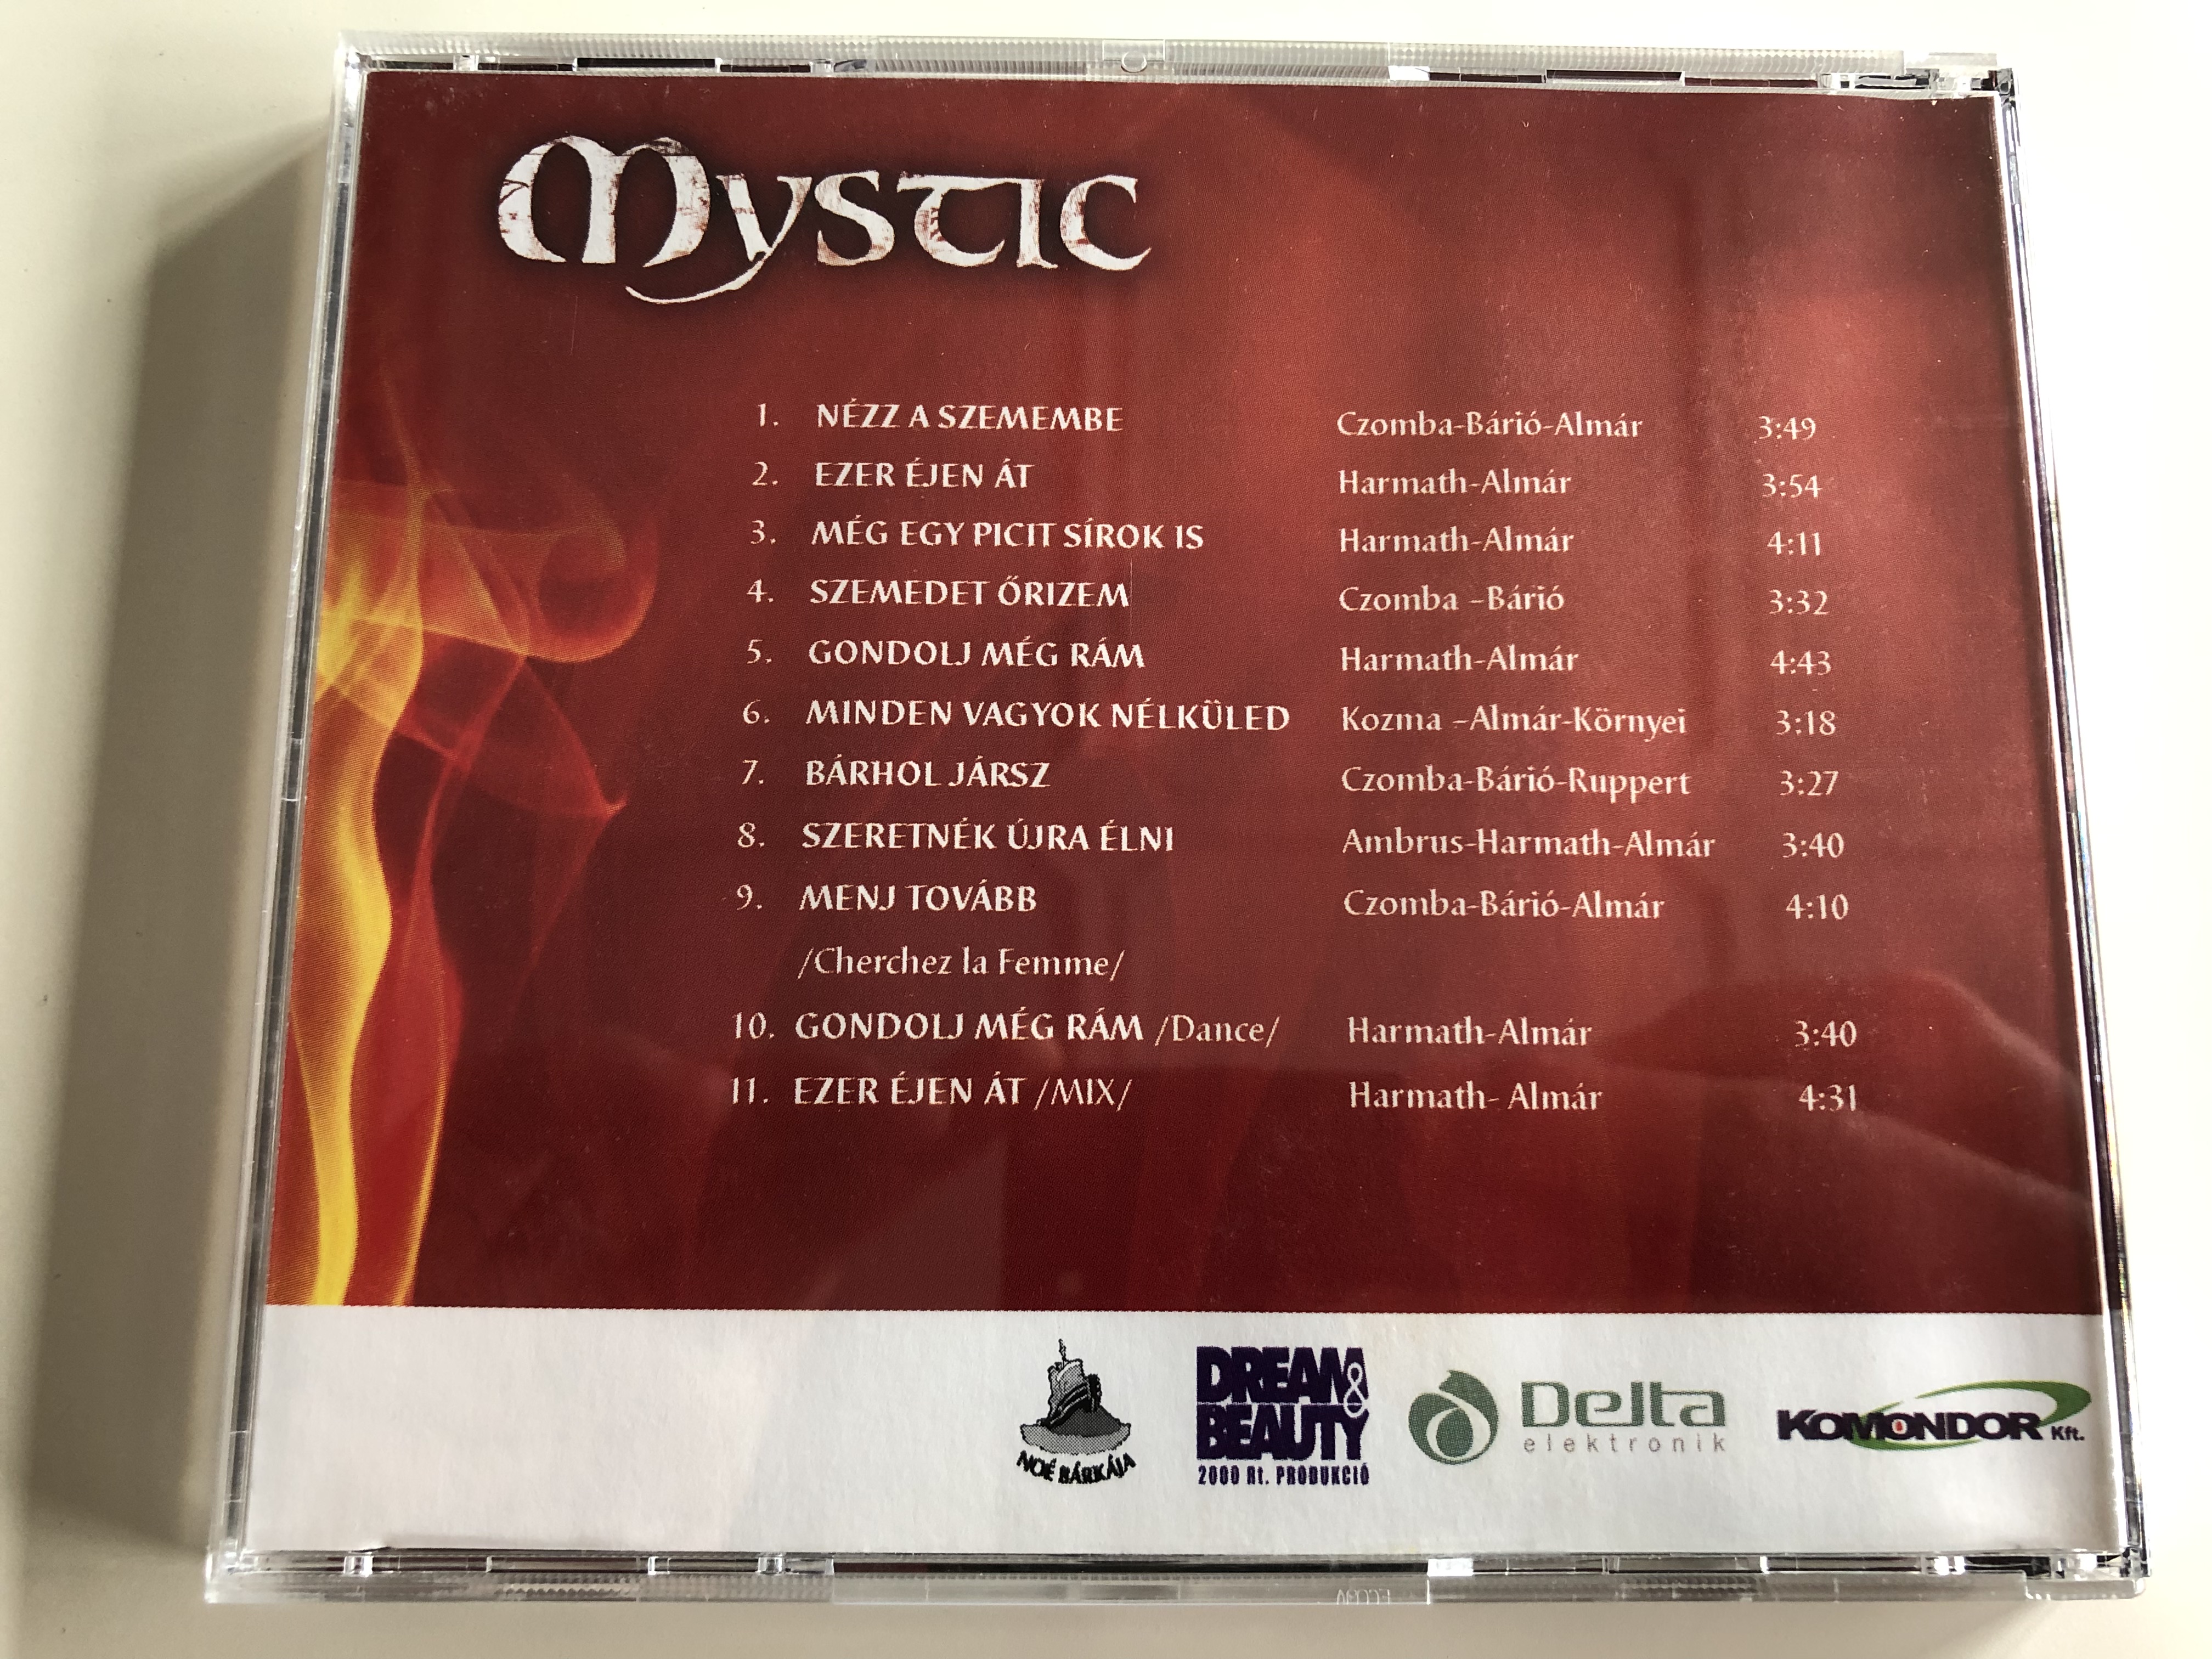 mystic-n-zz-a-szemembe-no-b-rk-ja-audio-cd-2005-5-.jpg